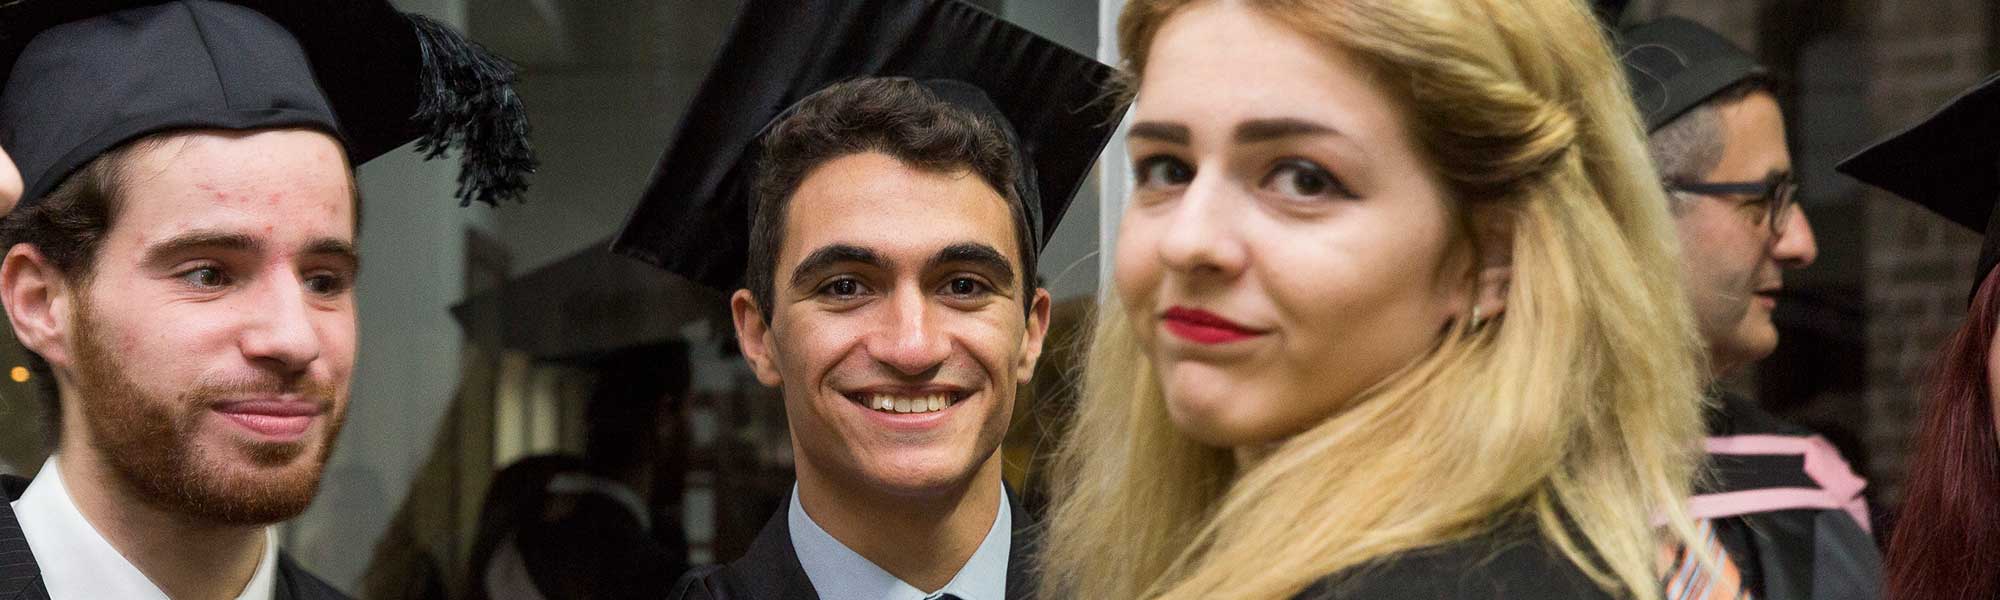 Graduates at the University of Malta